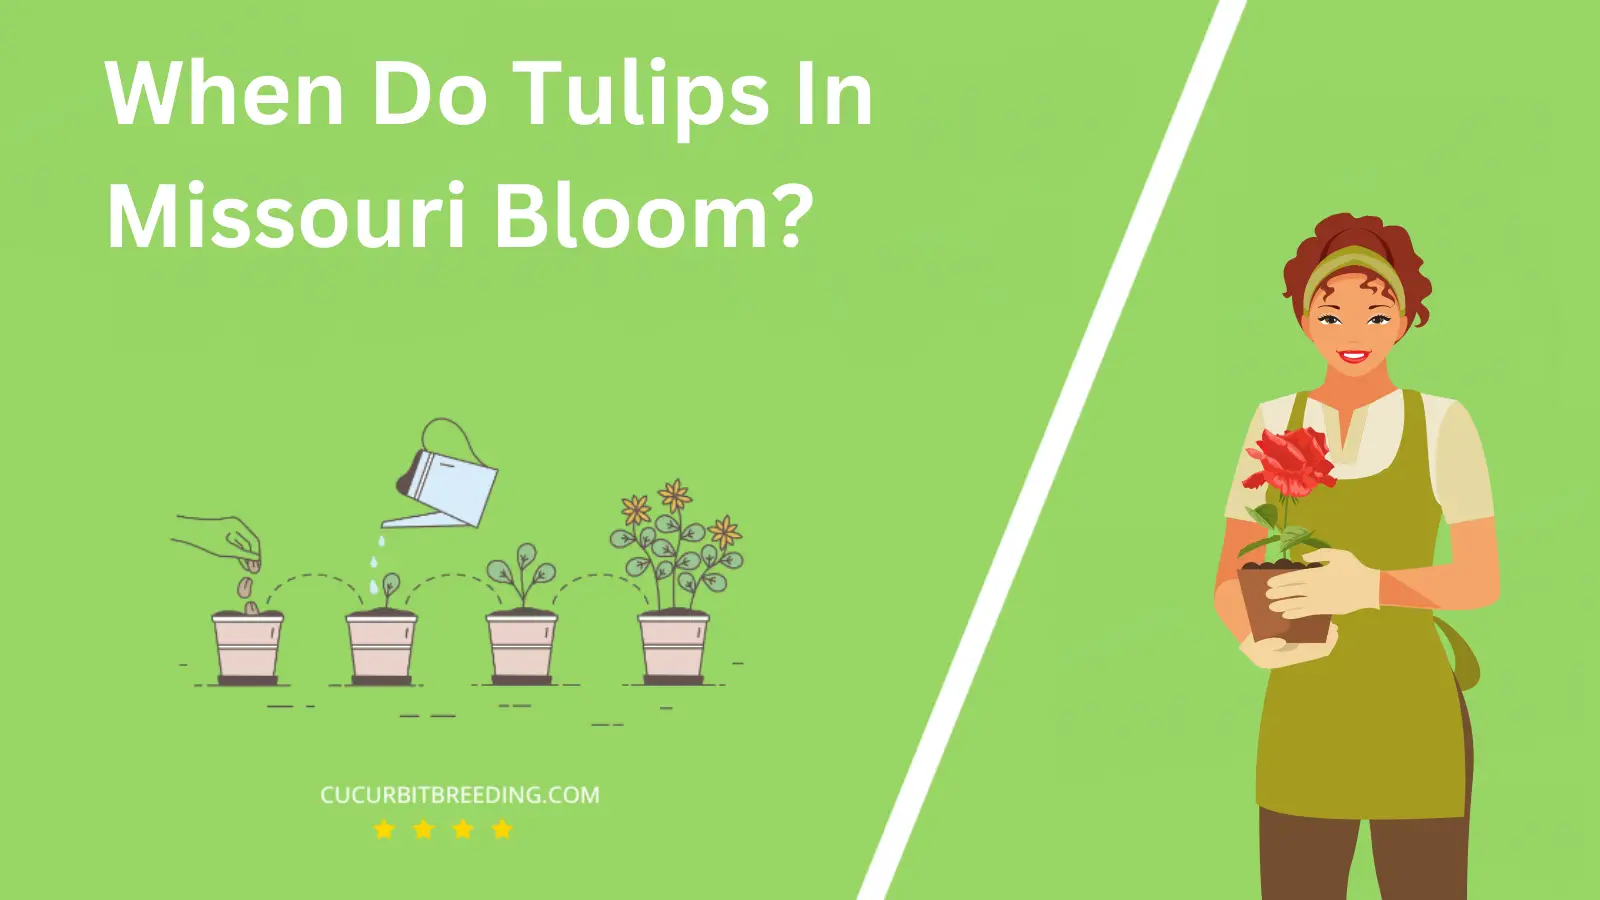 When Do Tulips In Missouri Bloom?